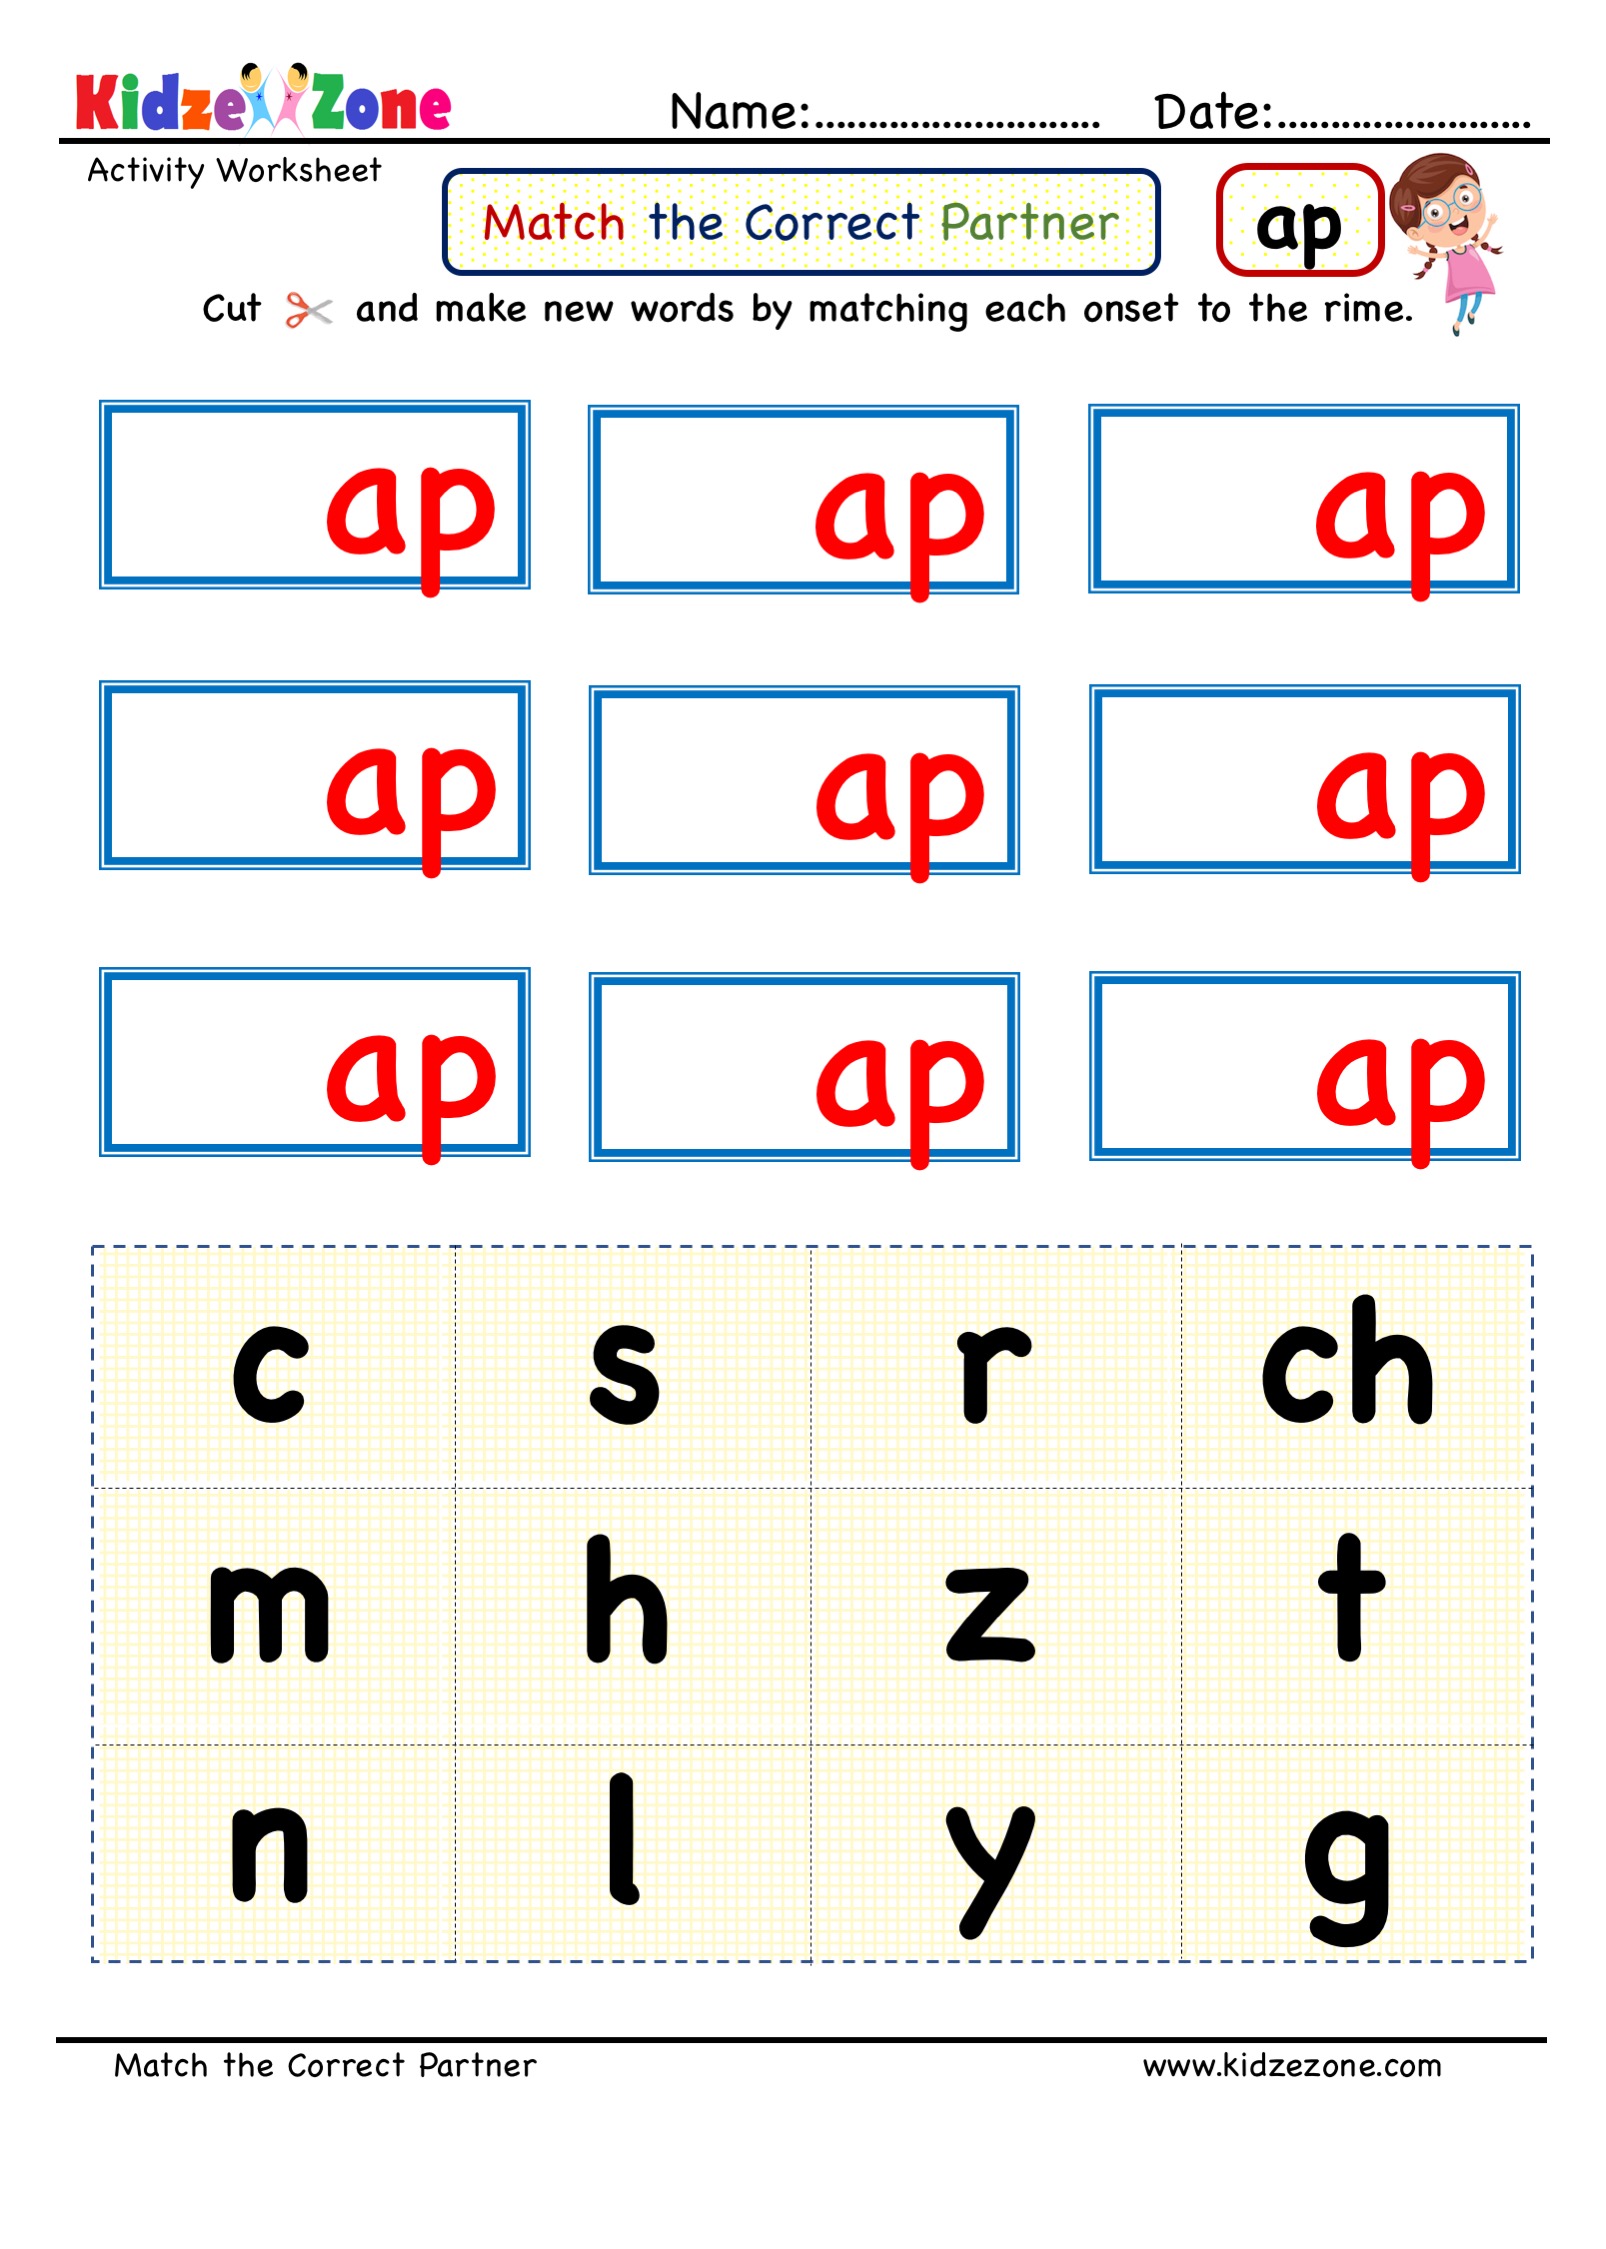 ap-word-family-cut-and-paste-worksheet-kidzezone